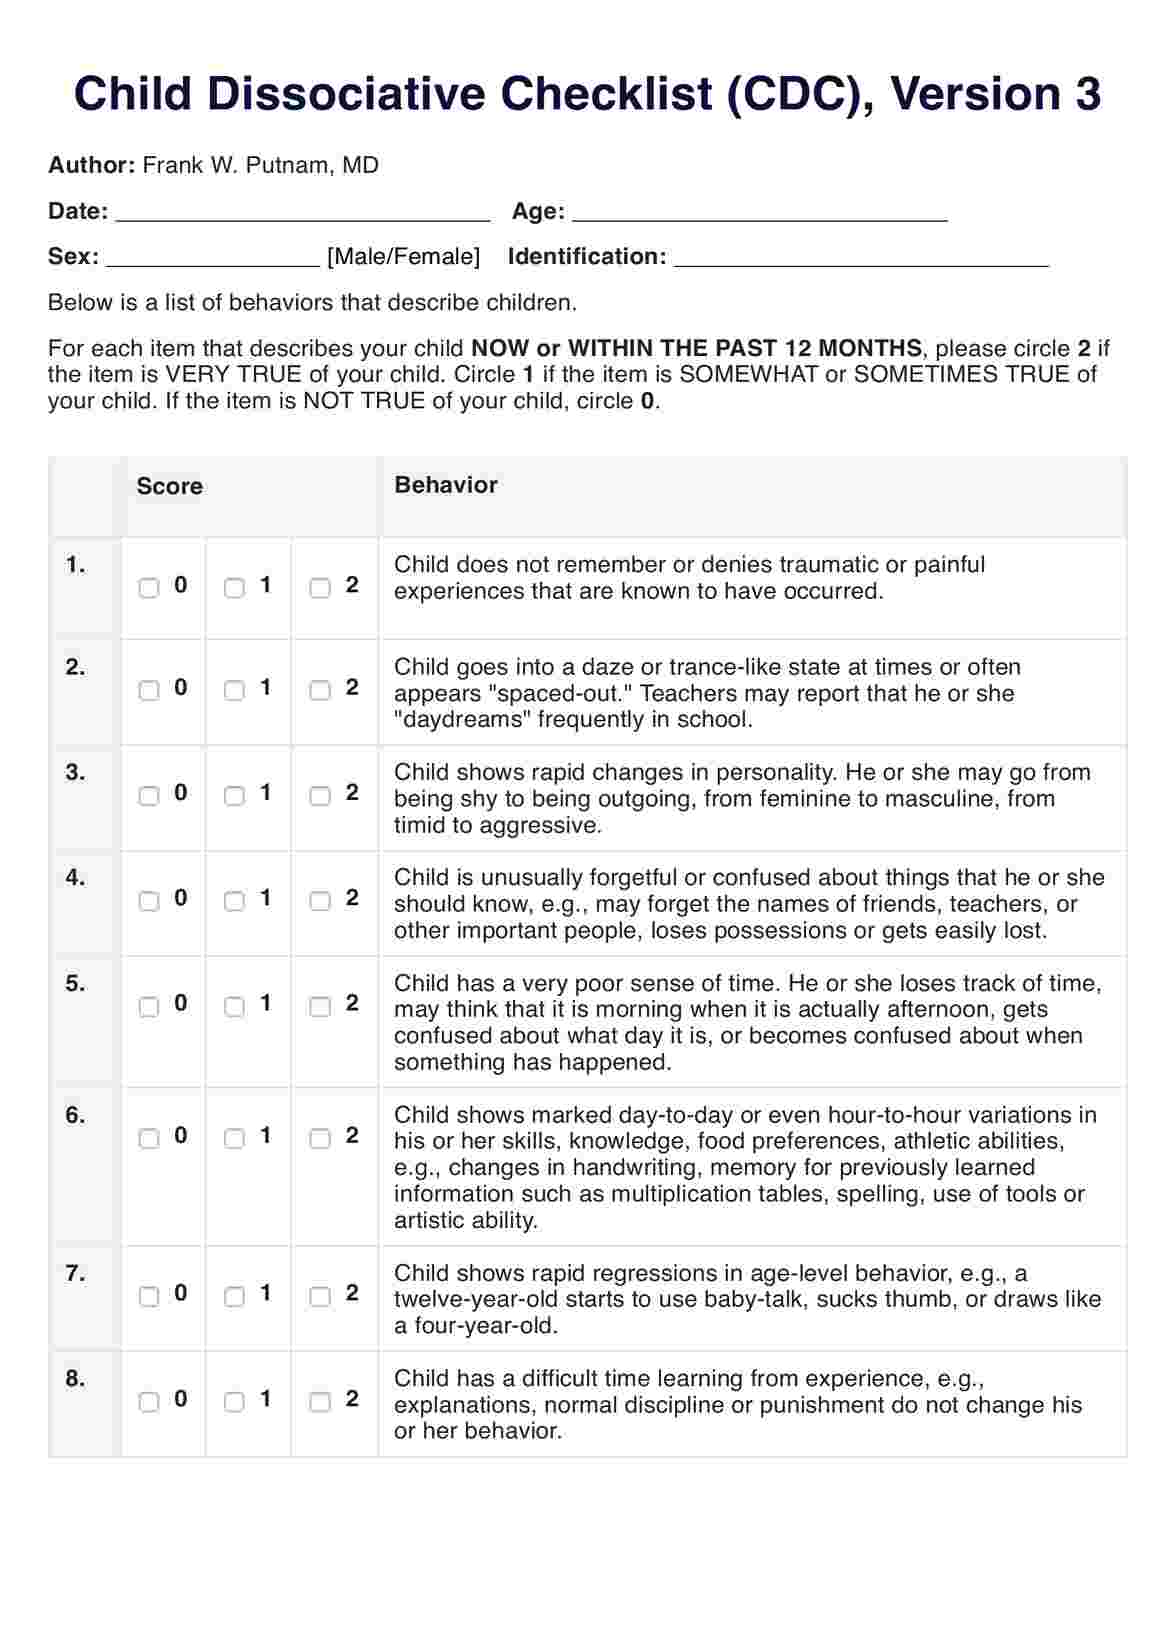 Child Dissociative Checklist PDF Example